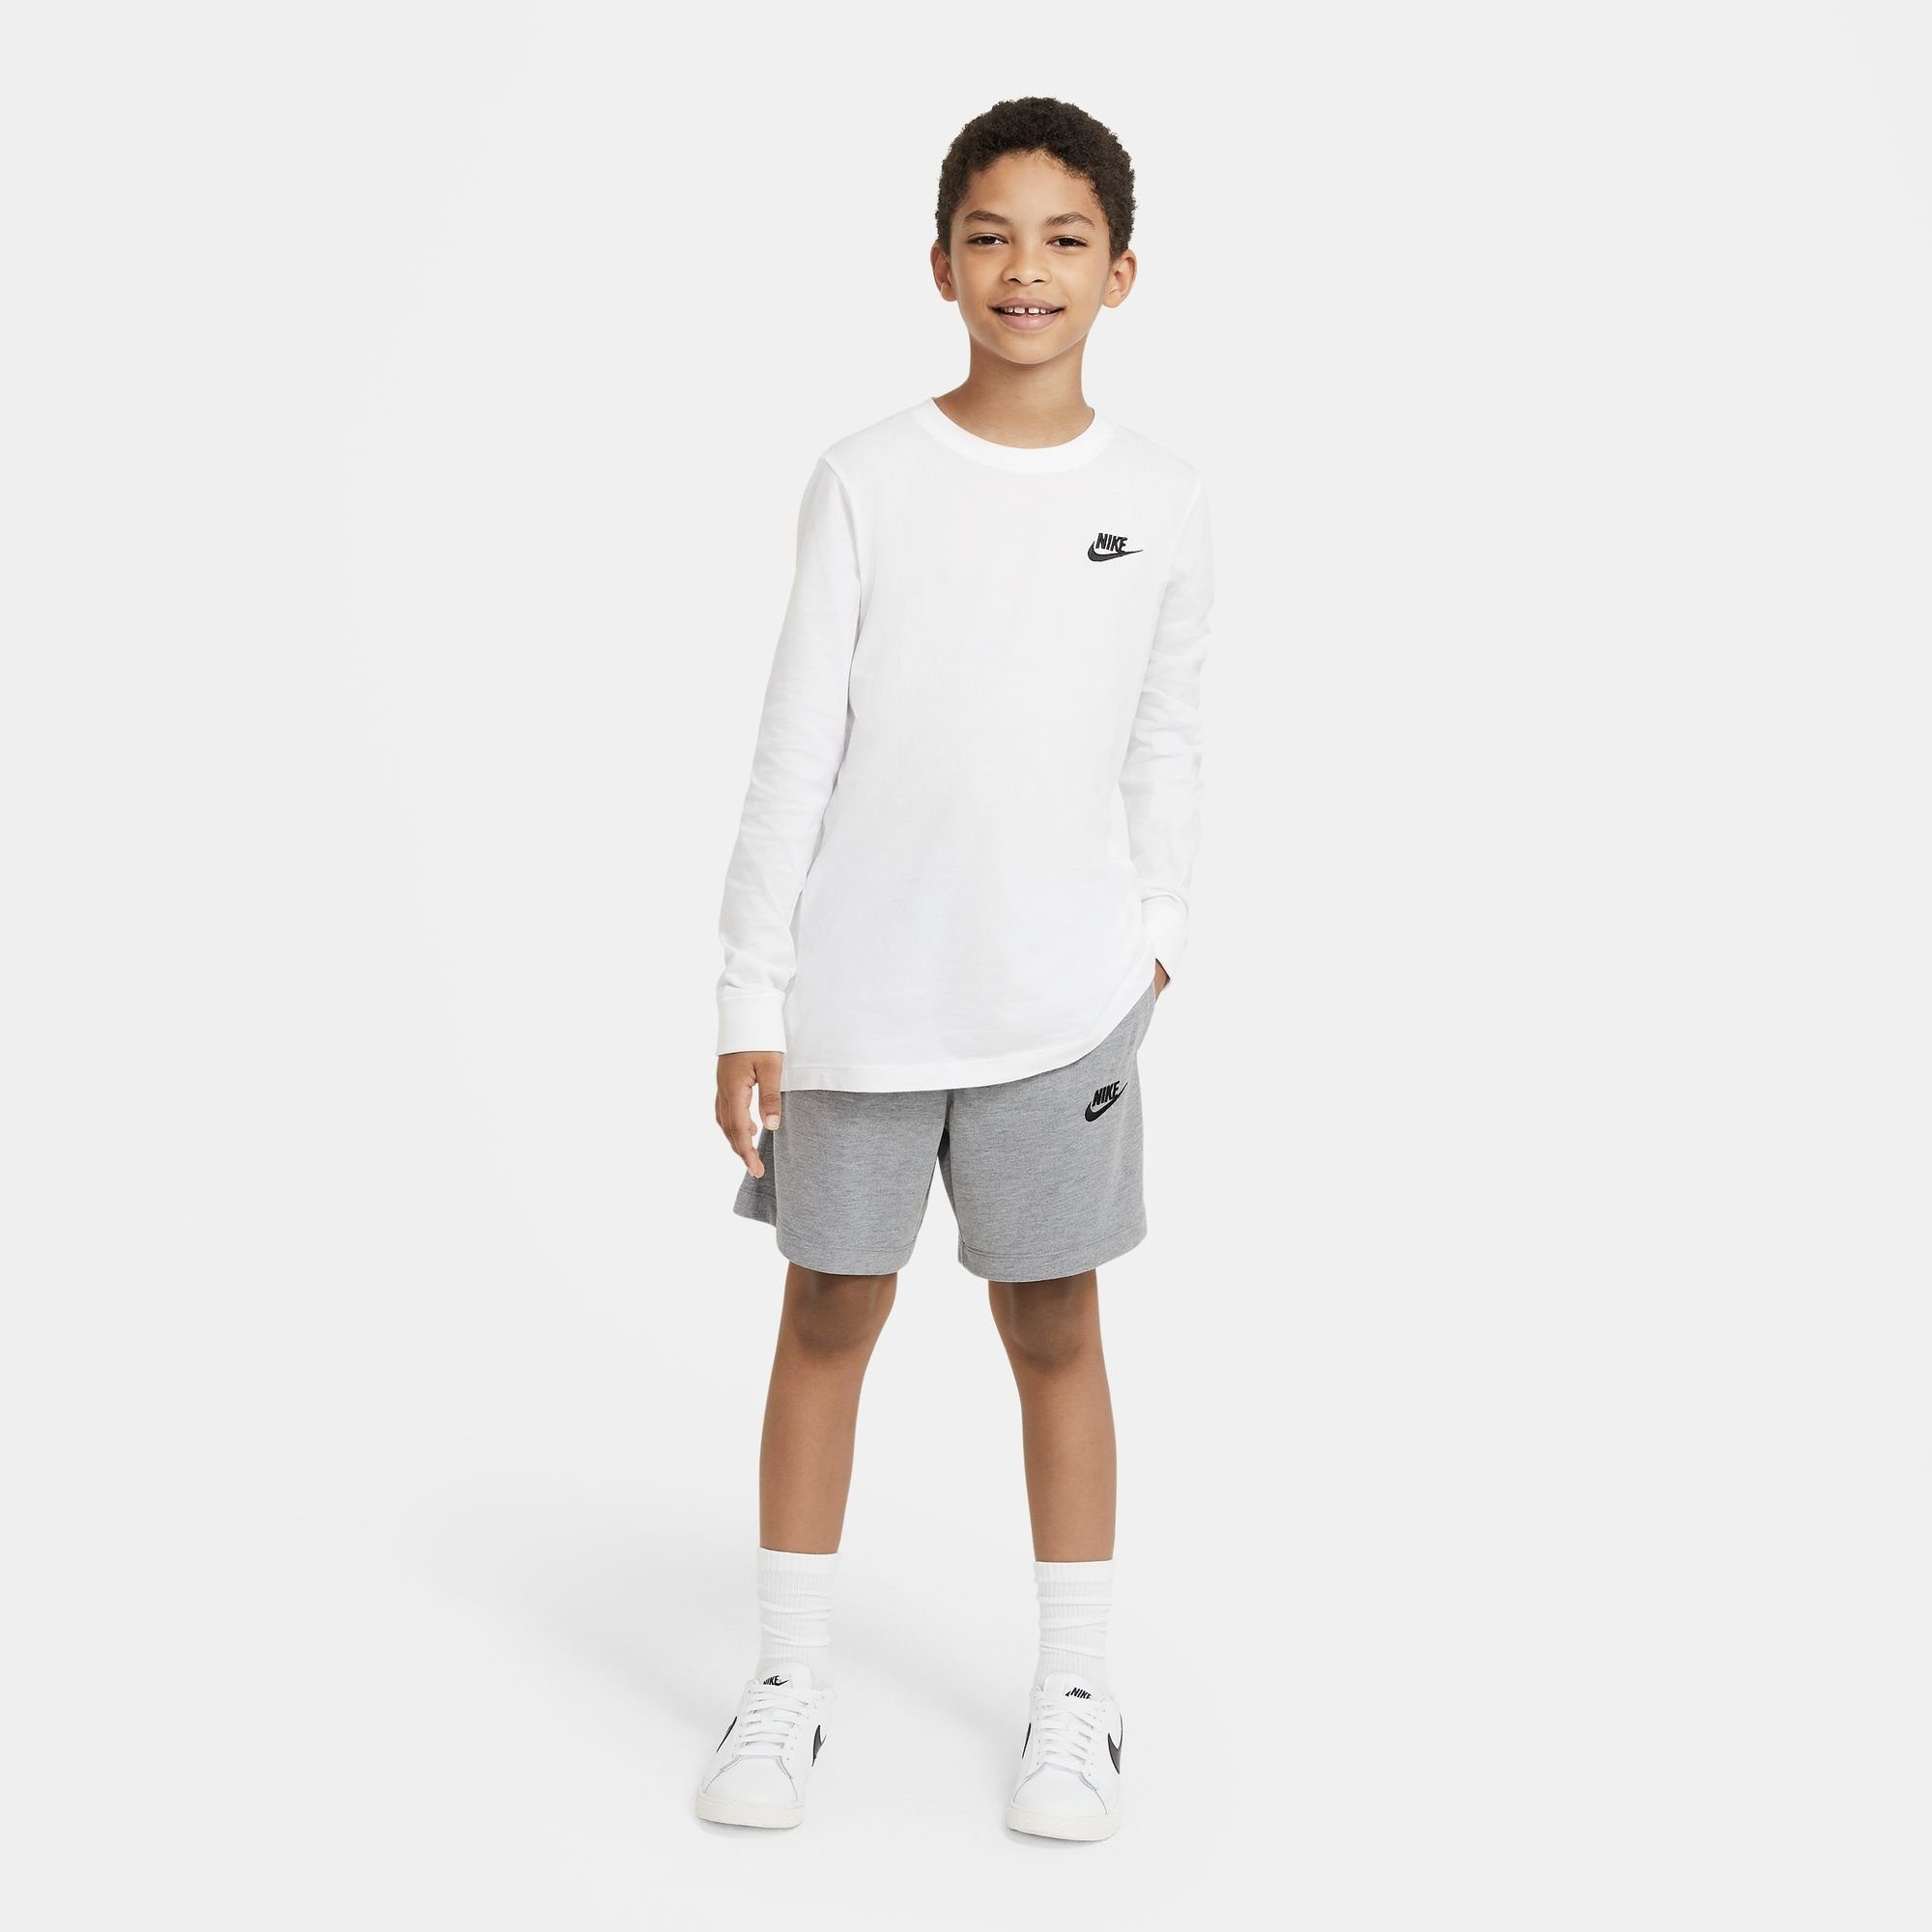 Nike Sportswear (BOYS) SHORTS Shorts BIG KIDS' grau JERSEY